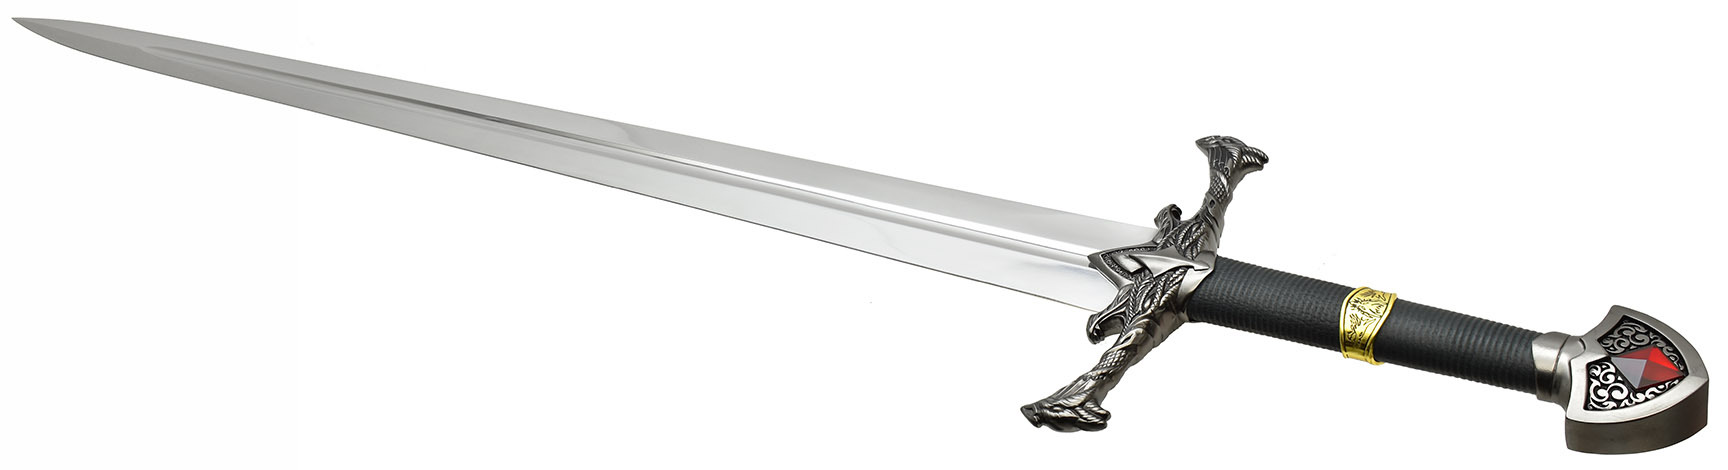 Game of Thrones - Blackfyre Sword